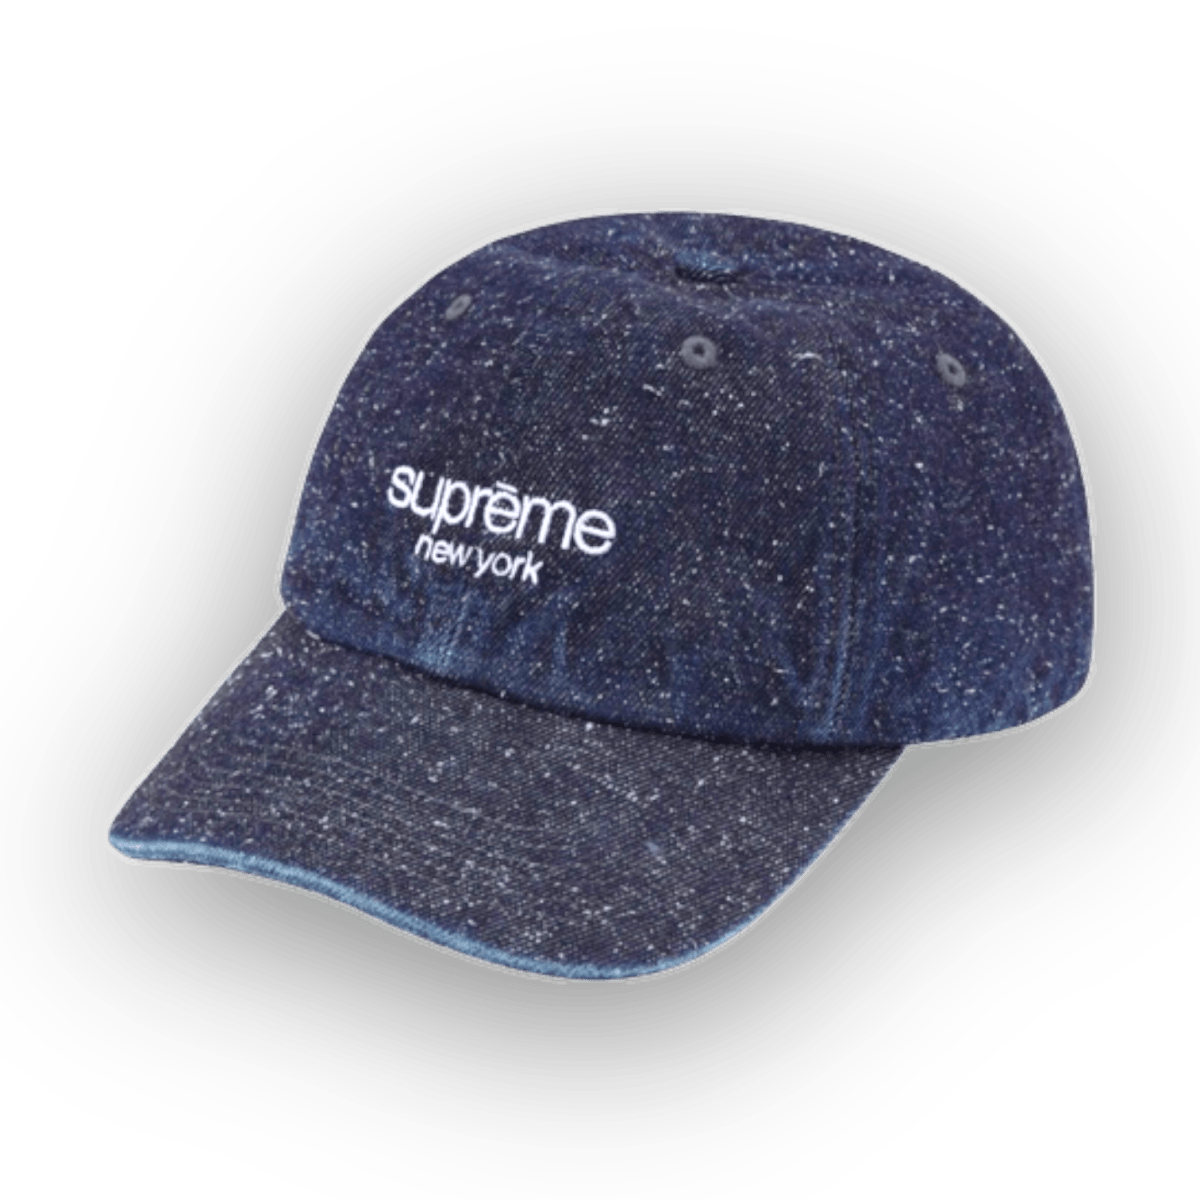 Supreme Logo 6 Panel Hats - Headwear - Supreme - Jawns on Fire - sneakers